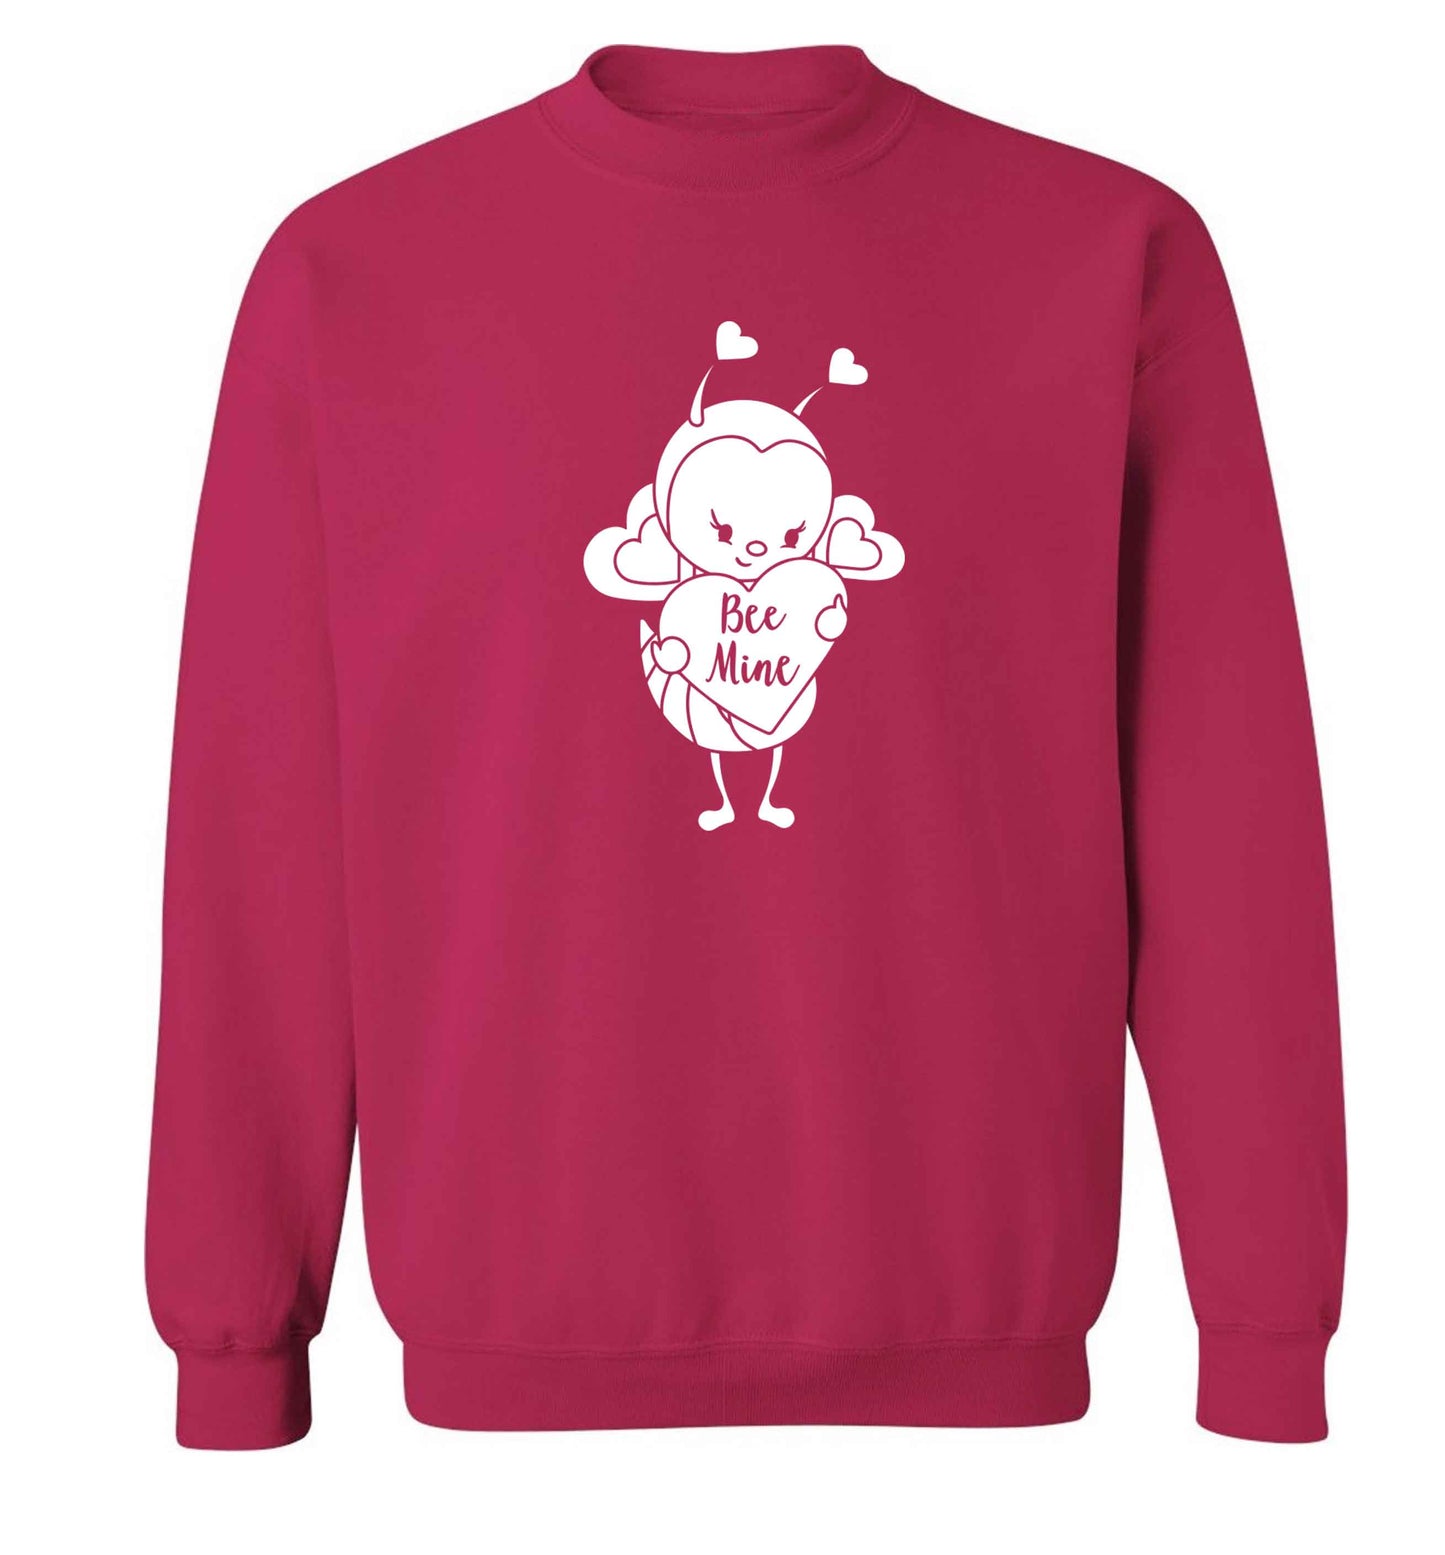 Bee mine adult's unisex pink sweater 2XL